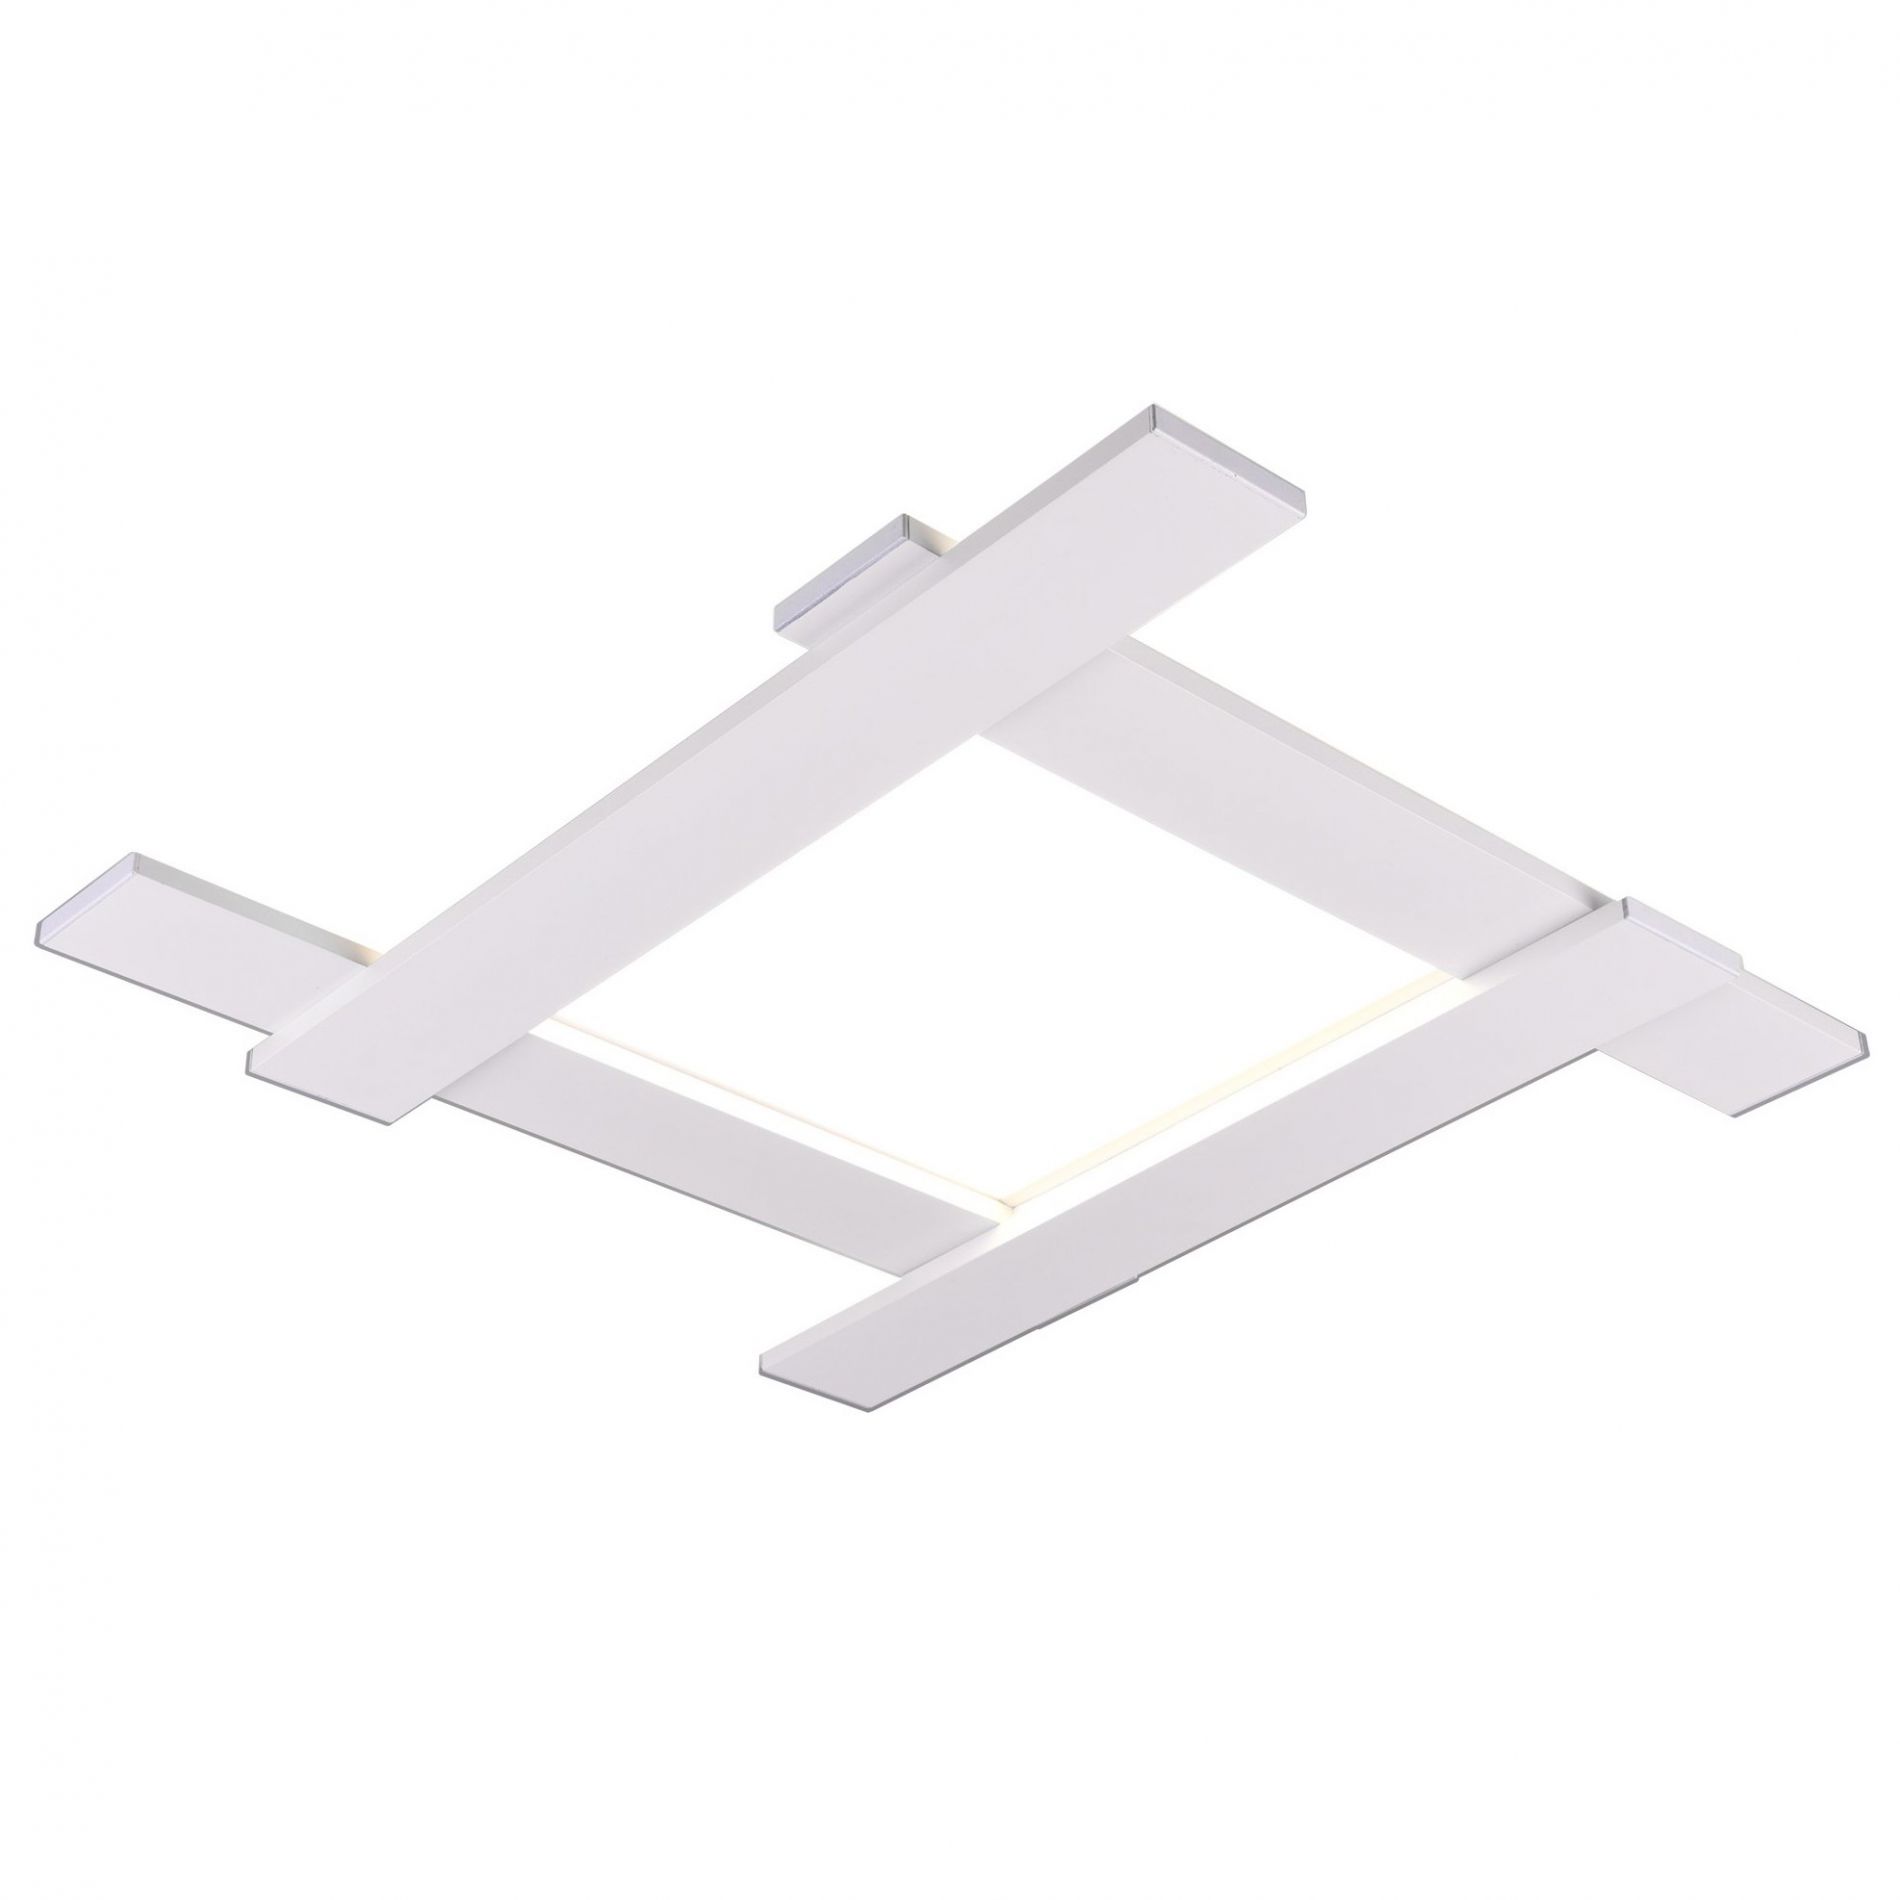 Plafonnier LED BELFAST en métal blanc mat